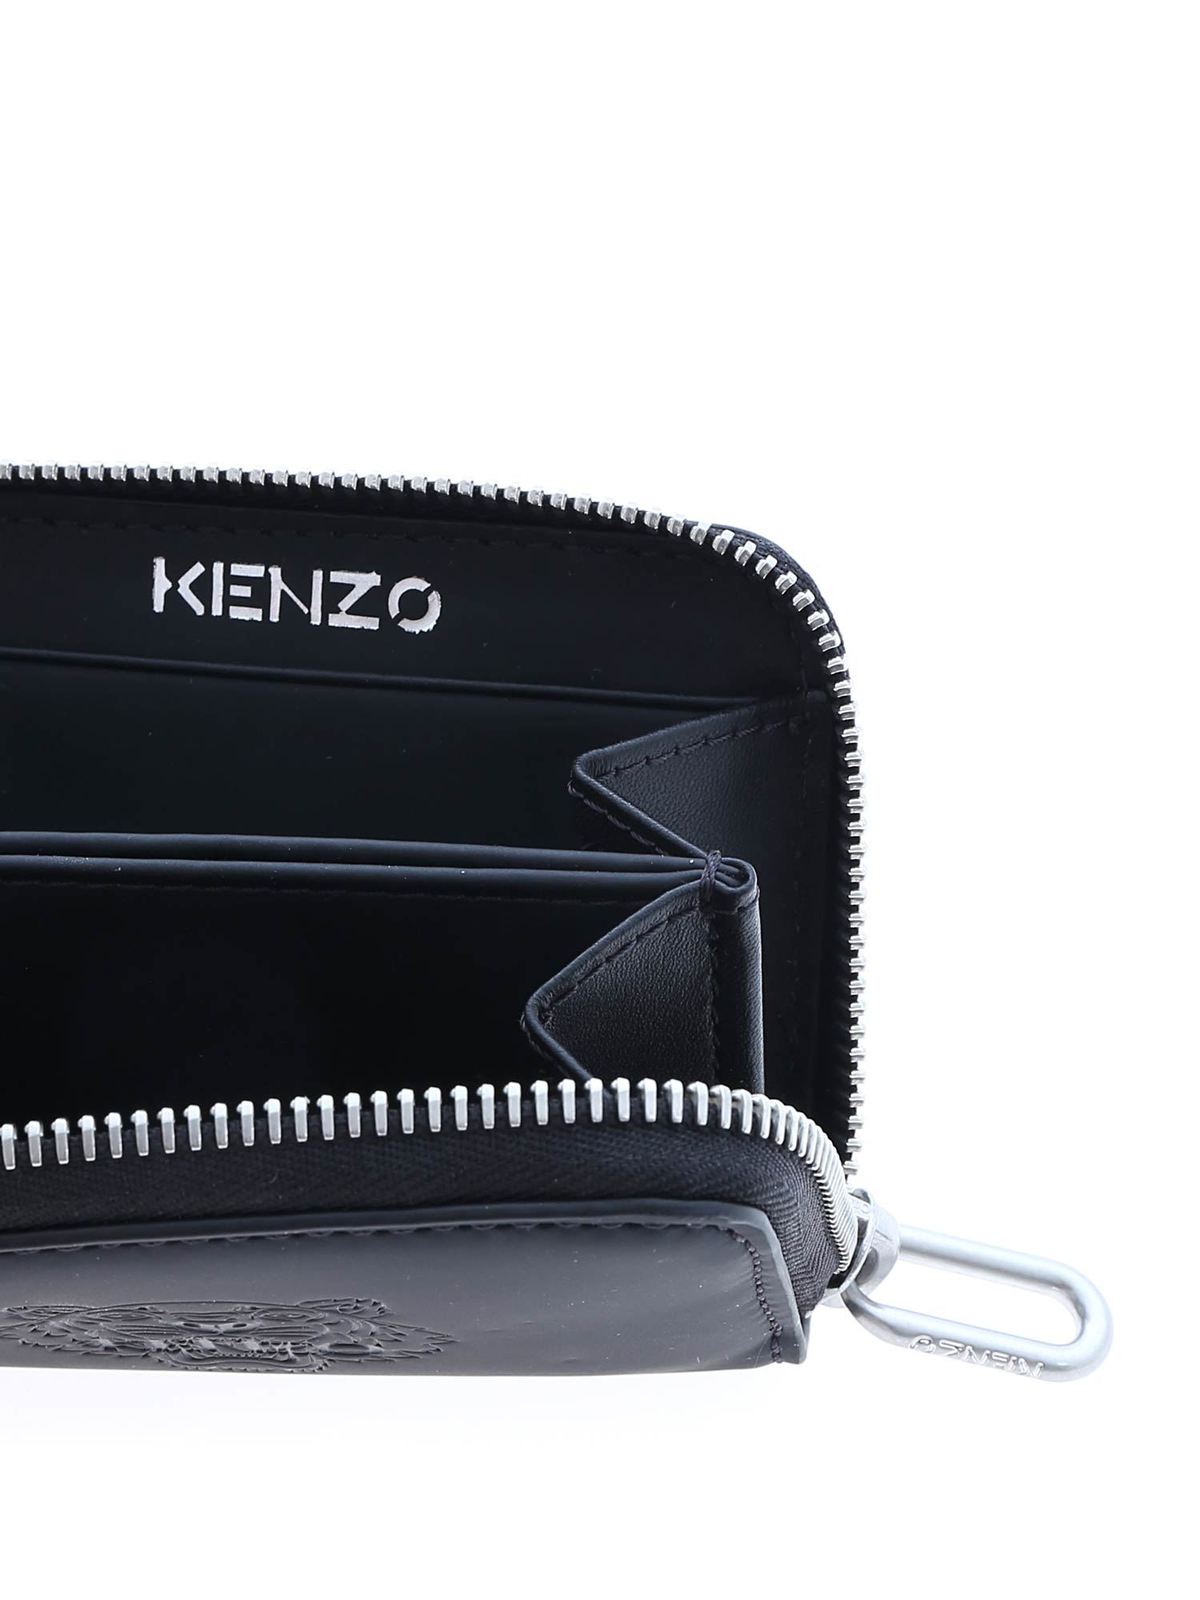 kenzo coin purse